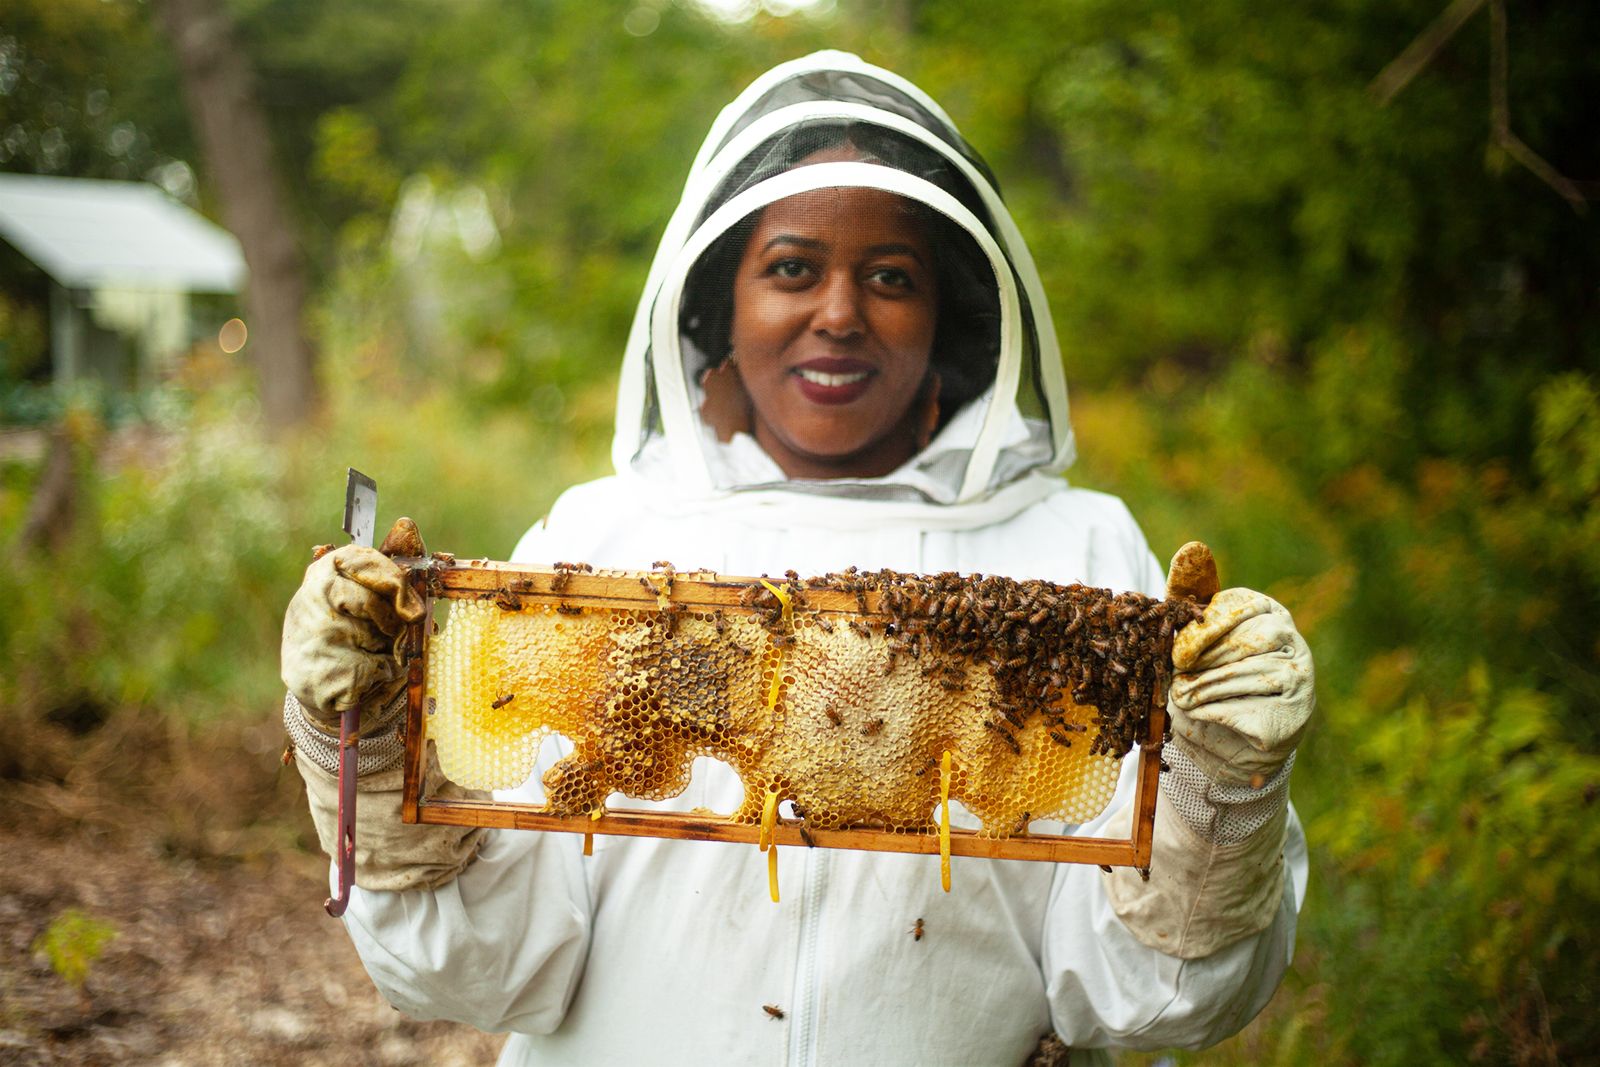 Beekeeper's Naturals Expands Distribution with Major Retailer